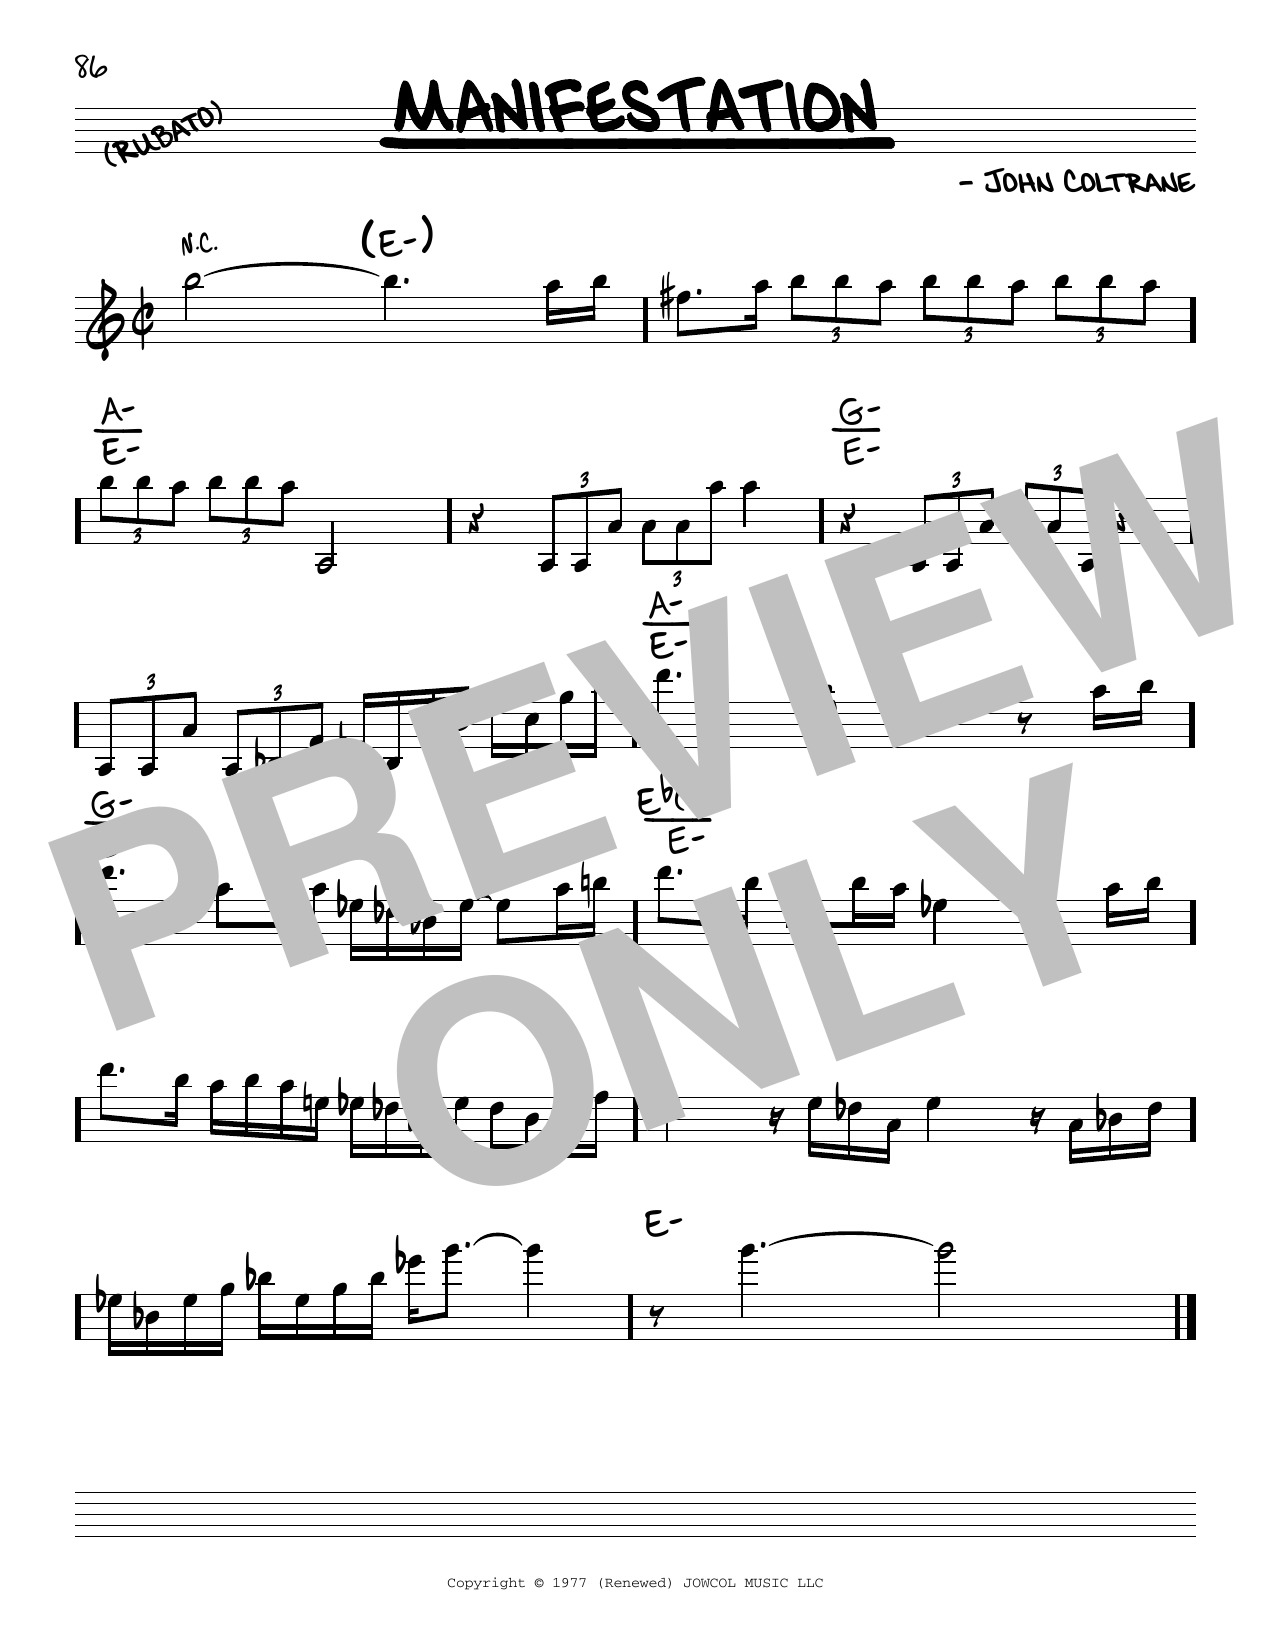 John Coltrane Manifestation Sheet Music Notes & Chords for Real Book – Melody & Chords - Download or Print PDF